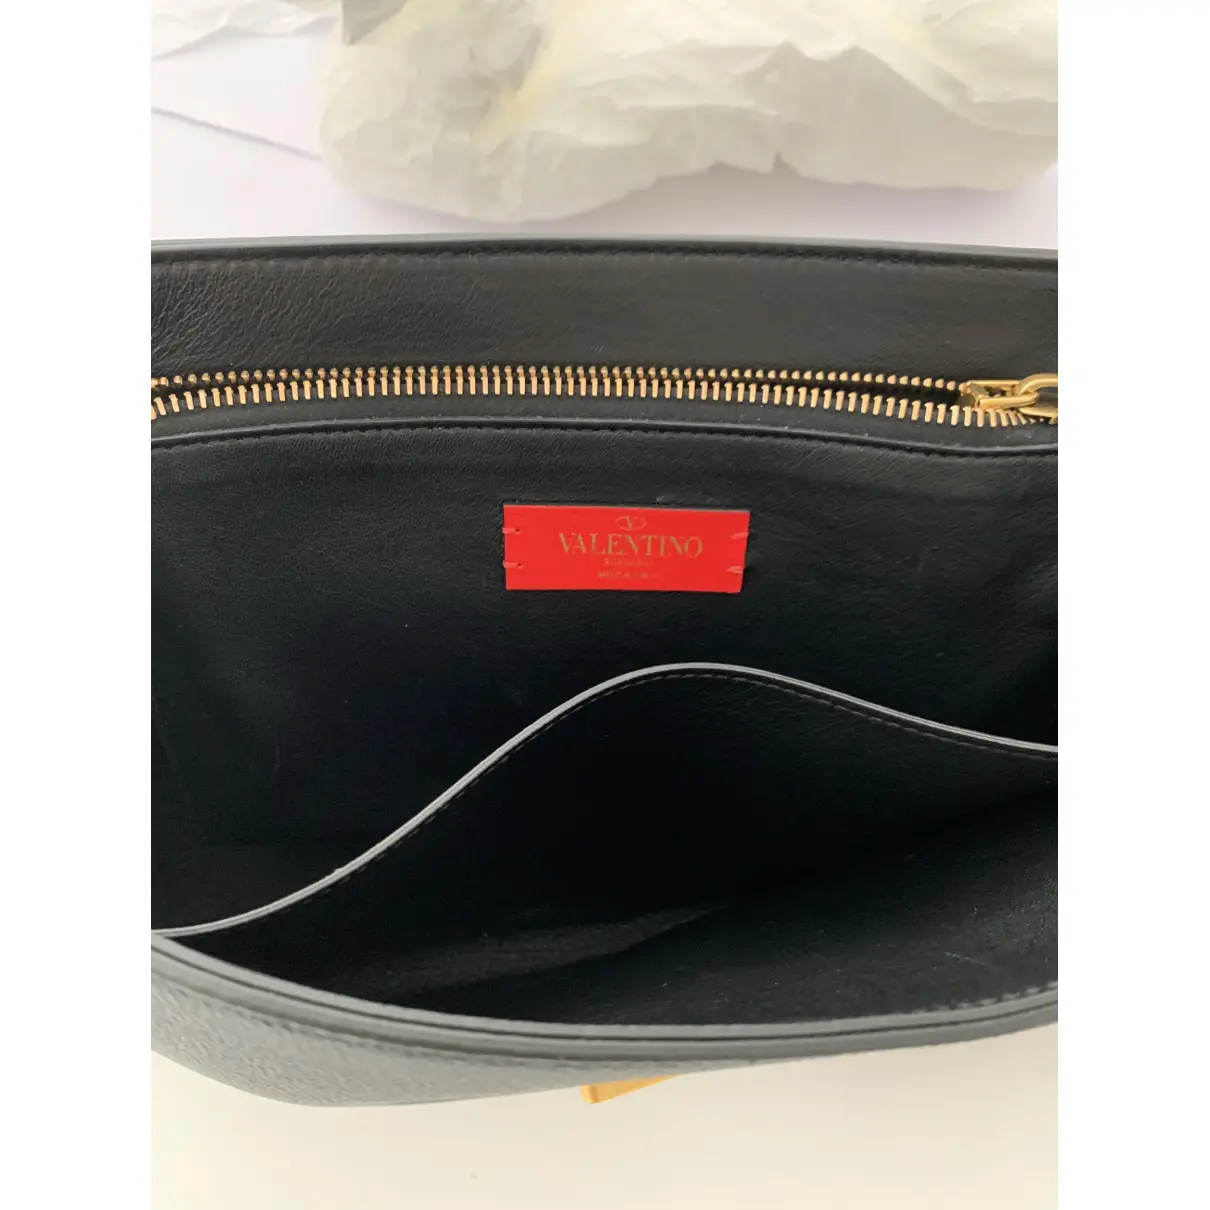 Vring leather handbag Valentino Garavani